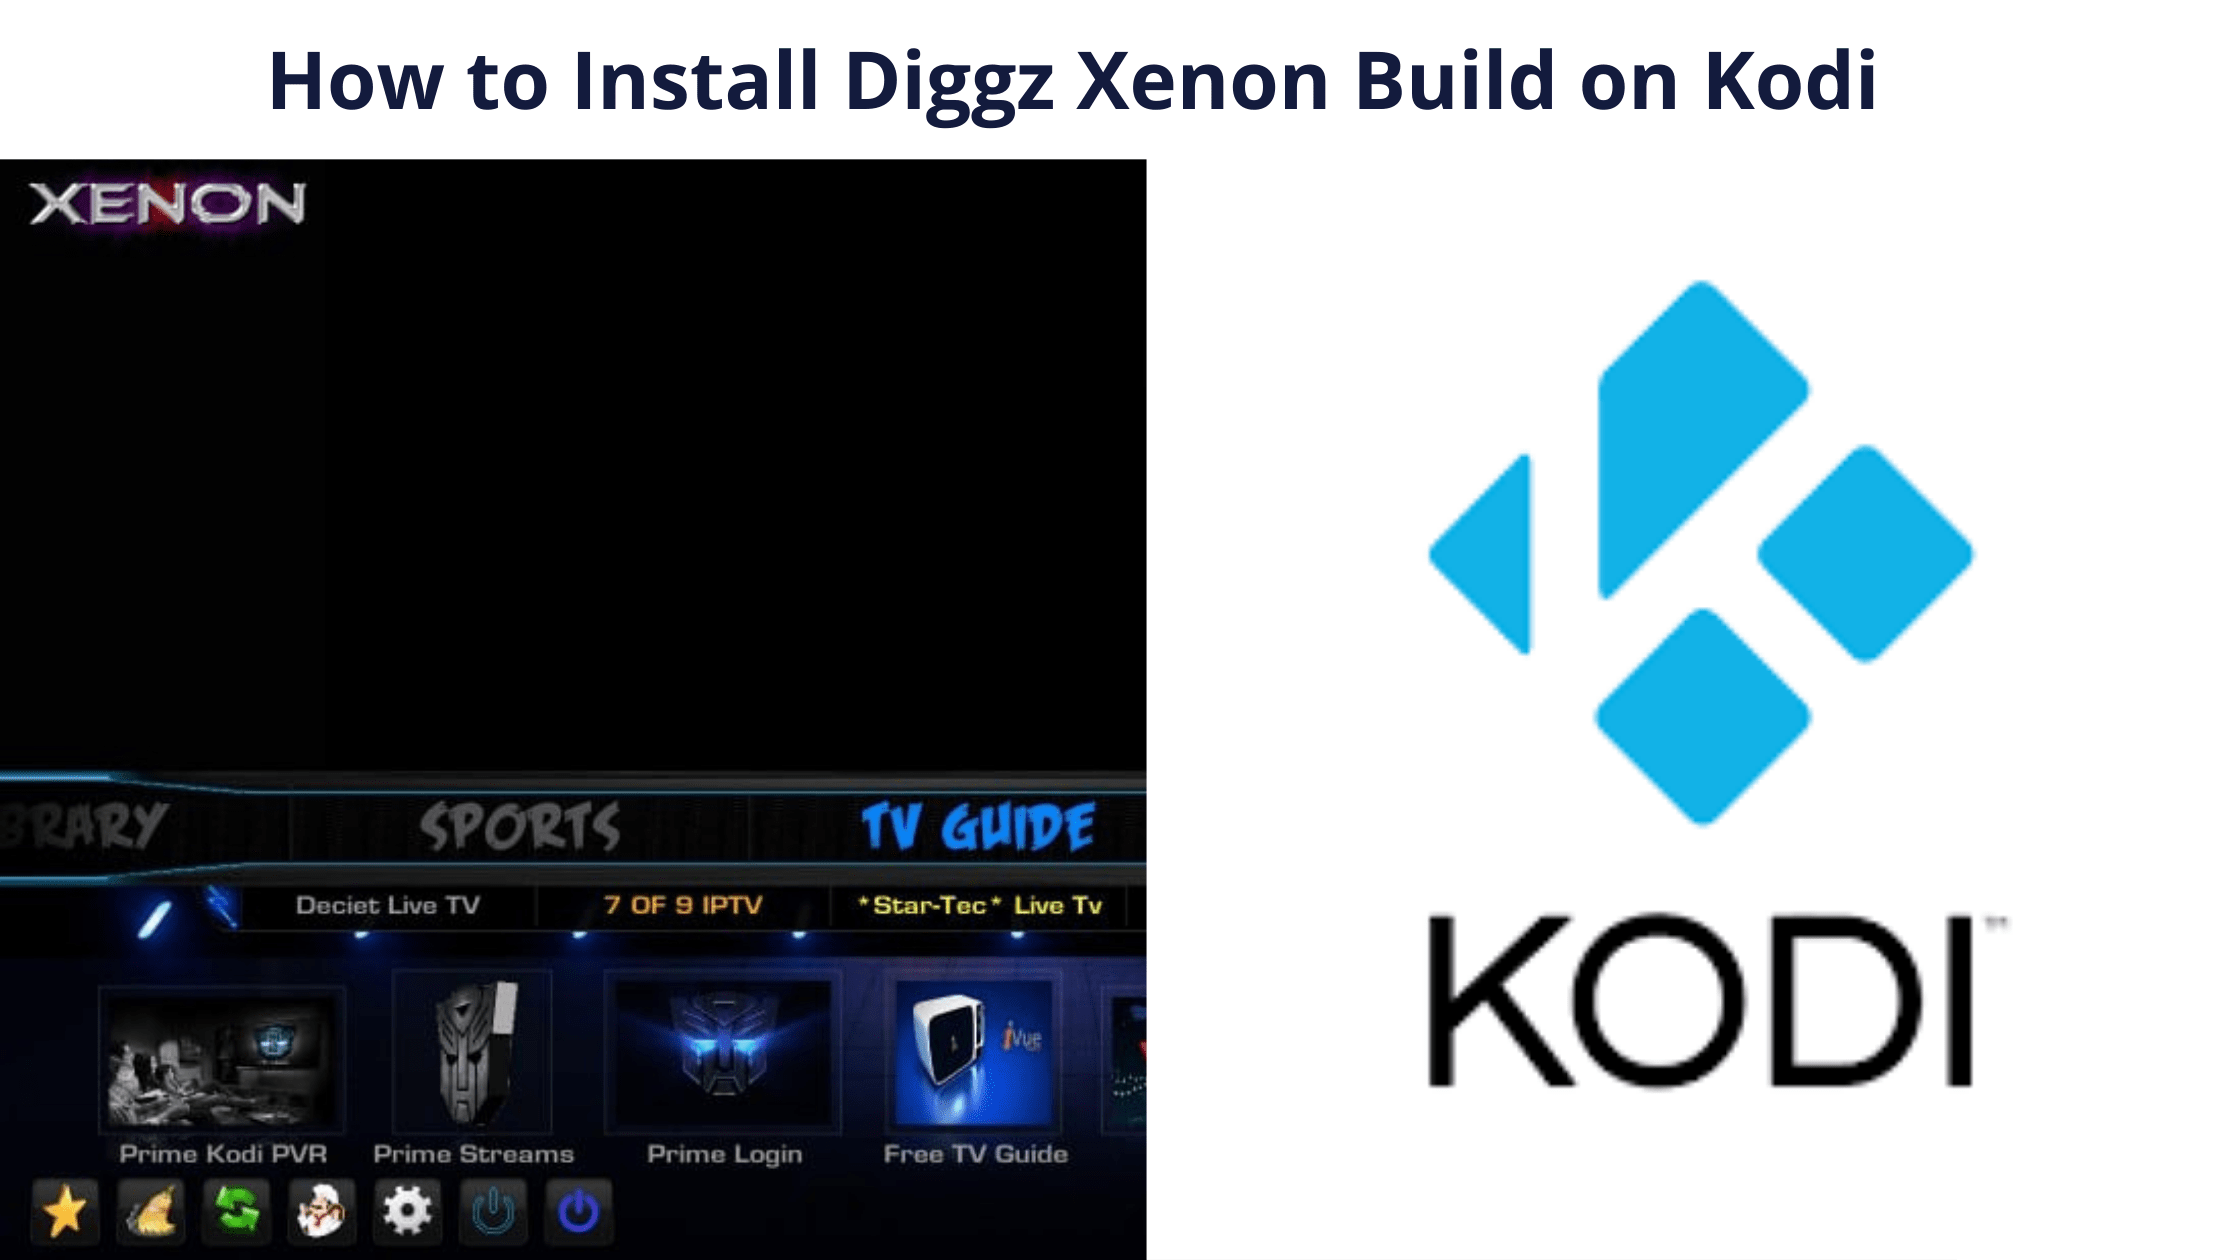 Diggz Xenon Build on Kodi